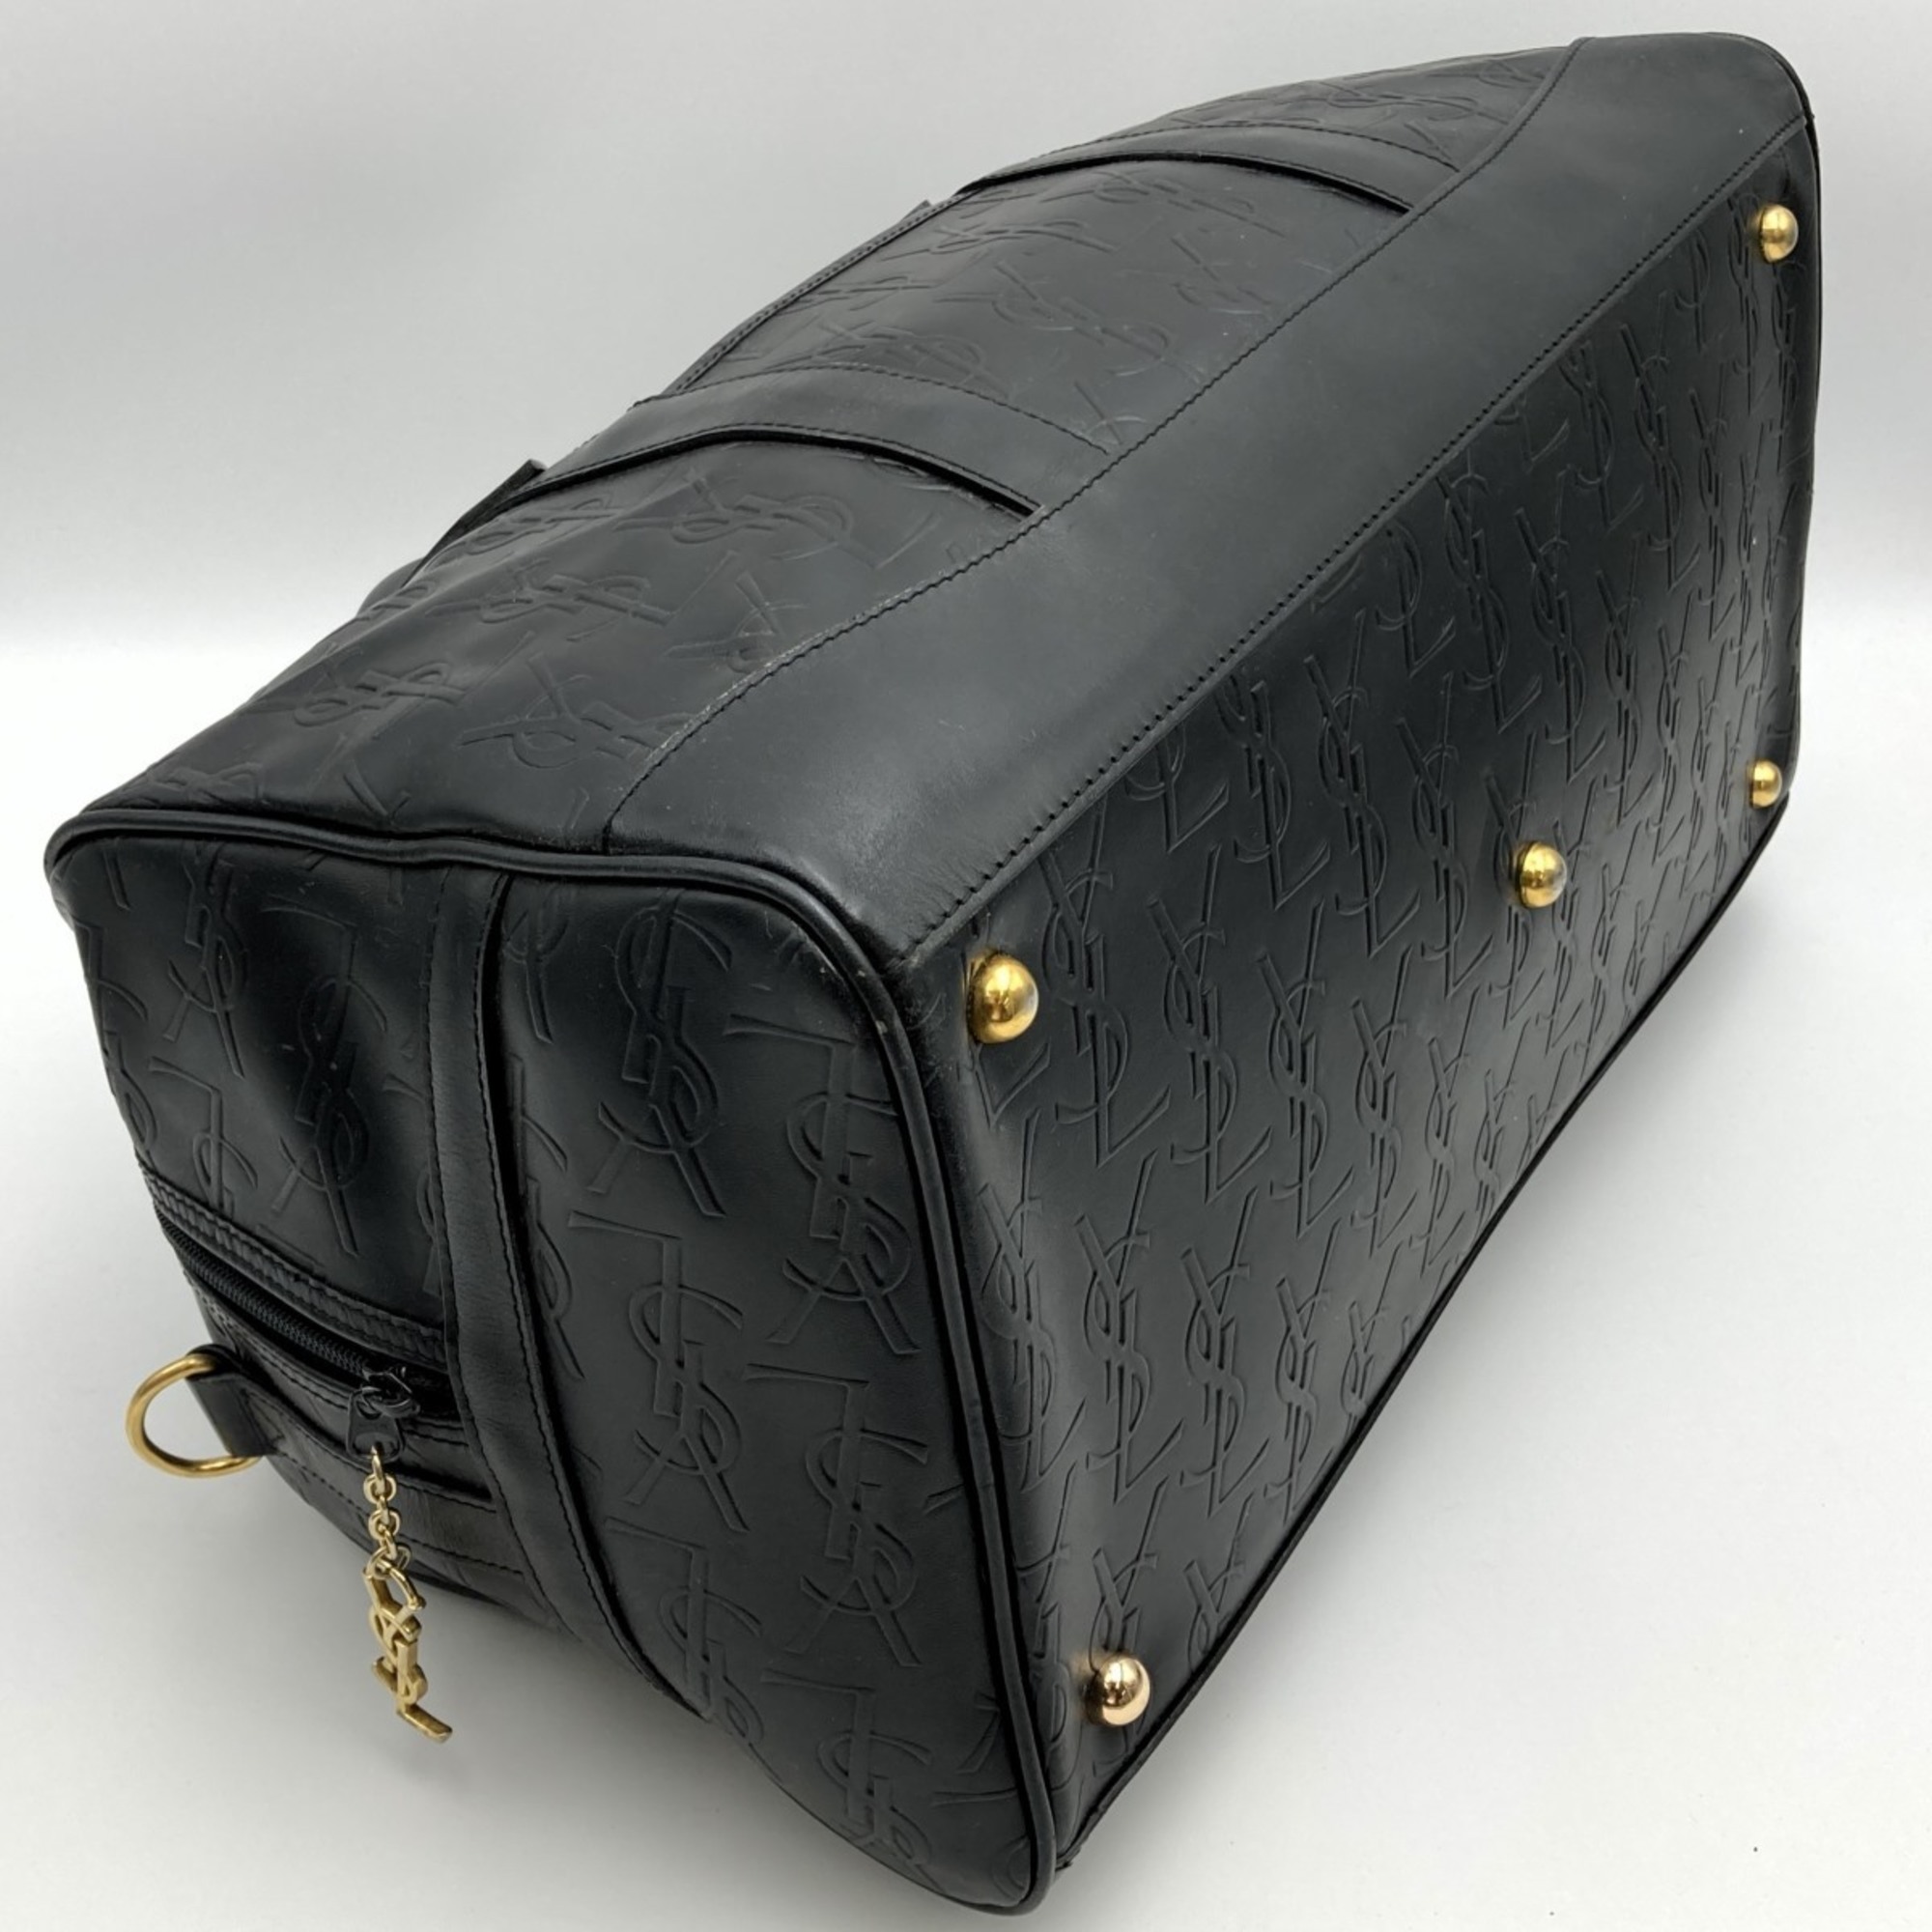 YVES SAINT LAURENT Yves Saint Laurent Boston Bag Handbag Travel Black Leather Ladies Men's Fashion